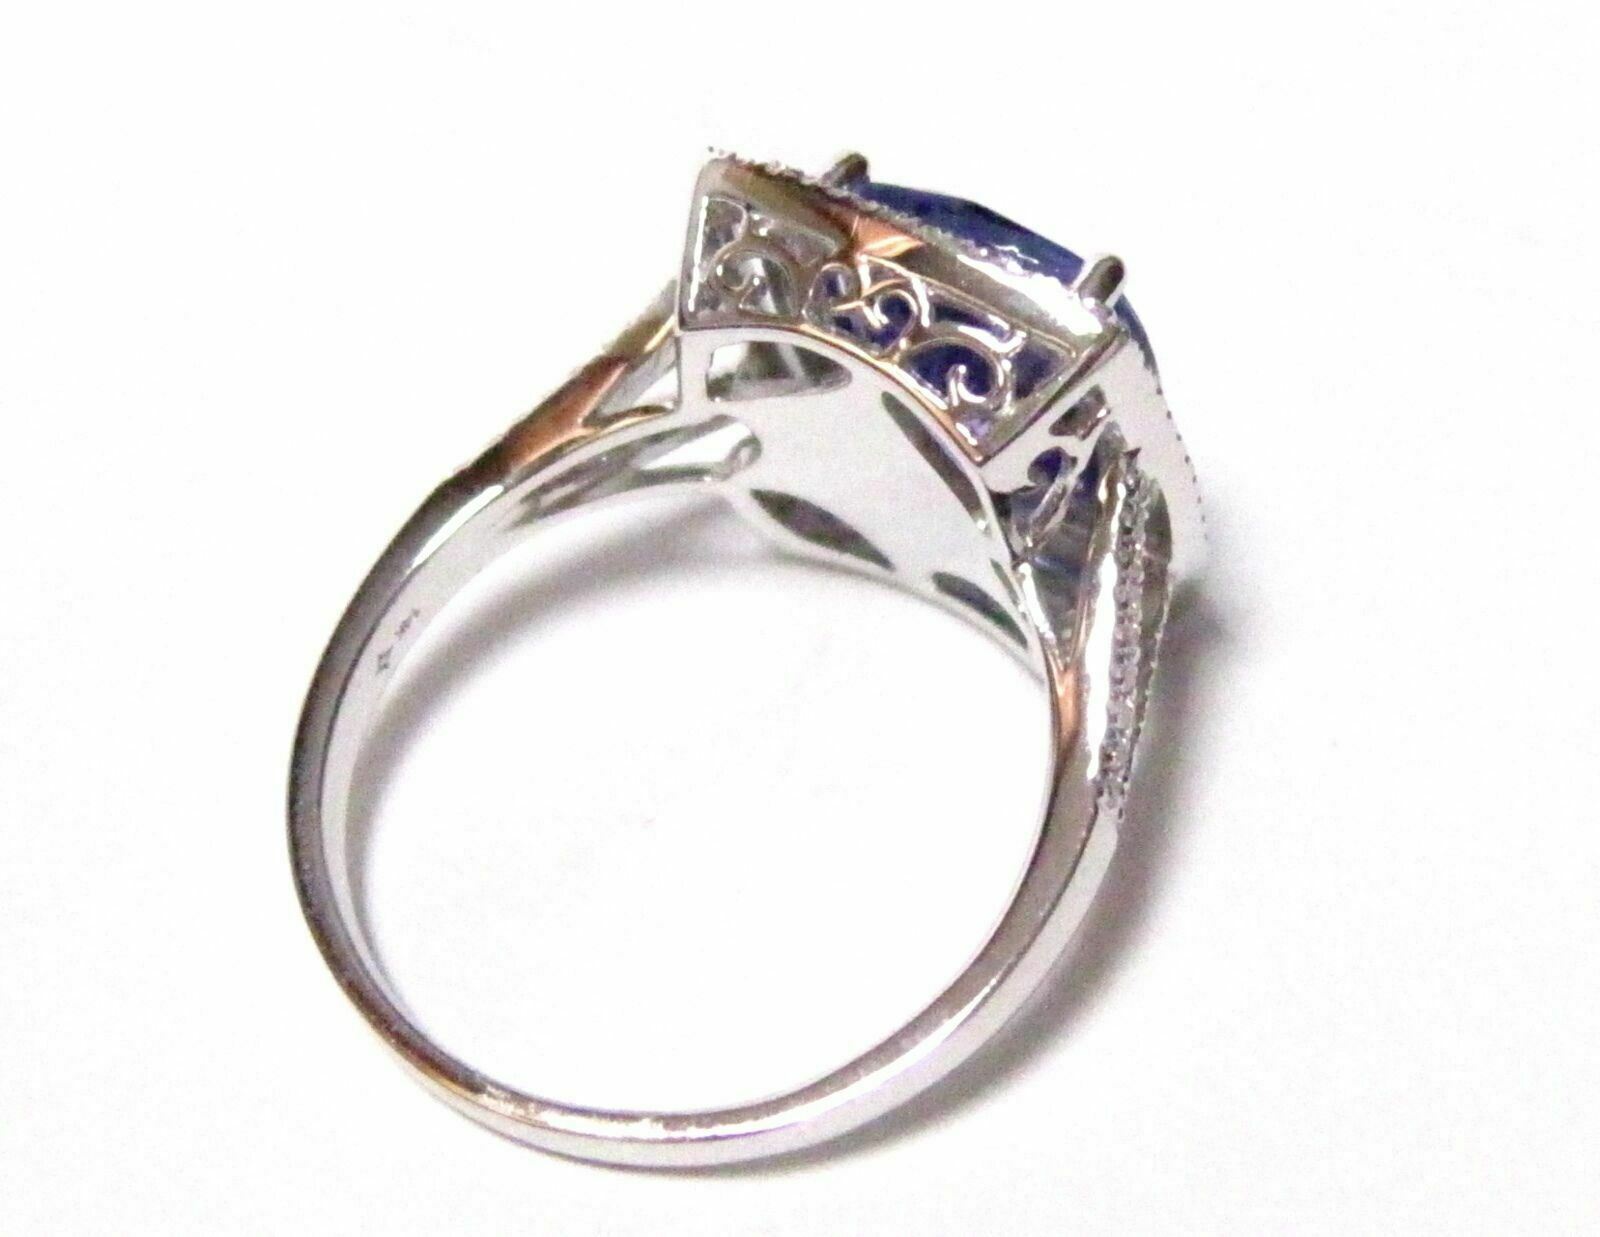 4.11 TCW Radiant Blue Tanzanite & Diamond Accents Ring Size 7 14k White Gold